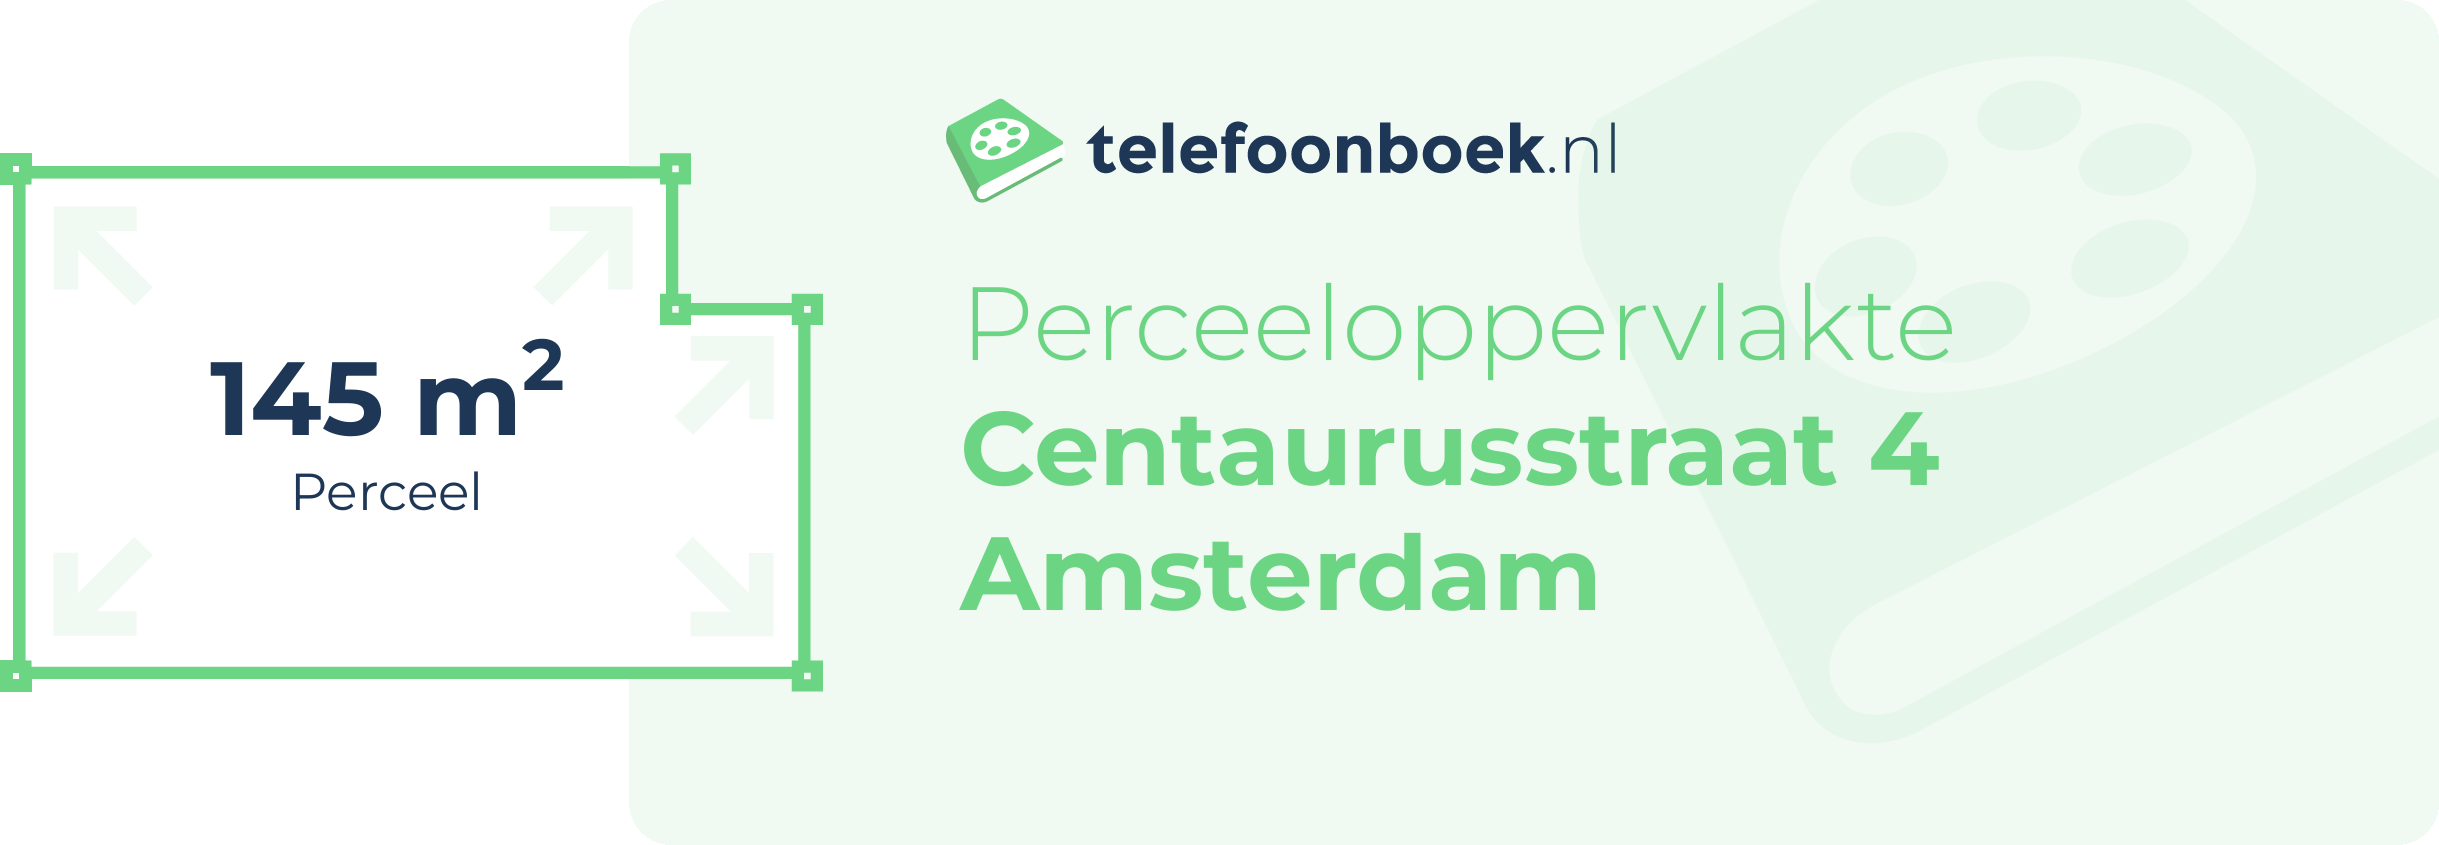 Perceeloppervlakte Centaurusstraat 4 Amsterdam